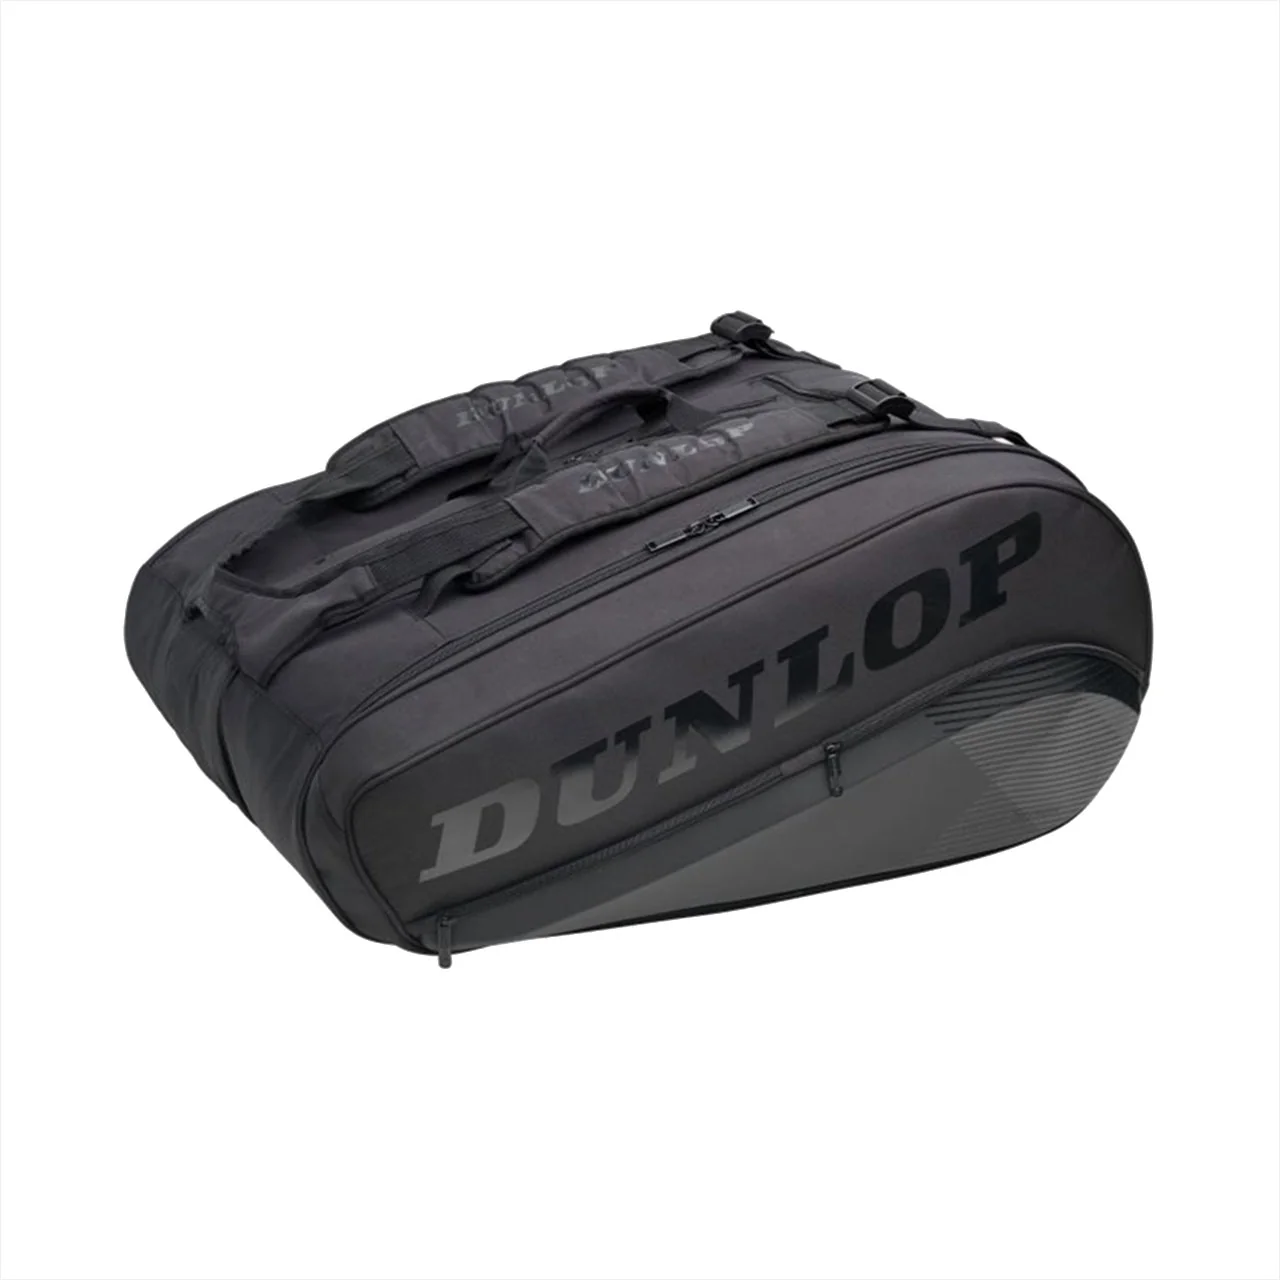 Dunlop D Tac CX Team 12 Pack Black